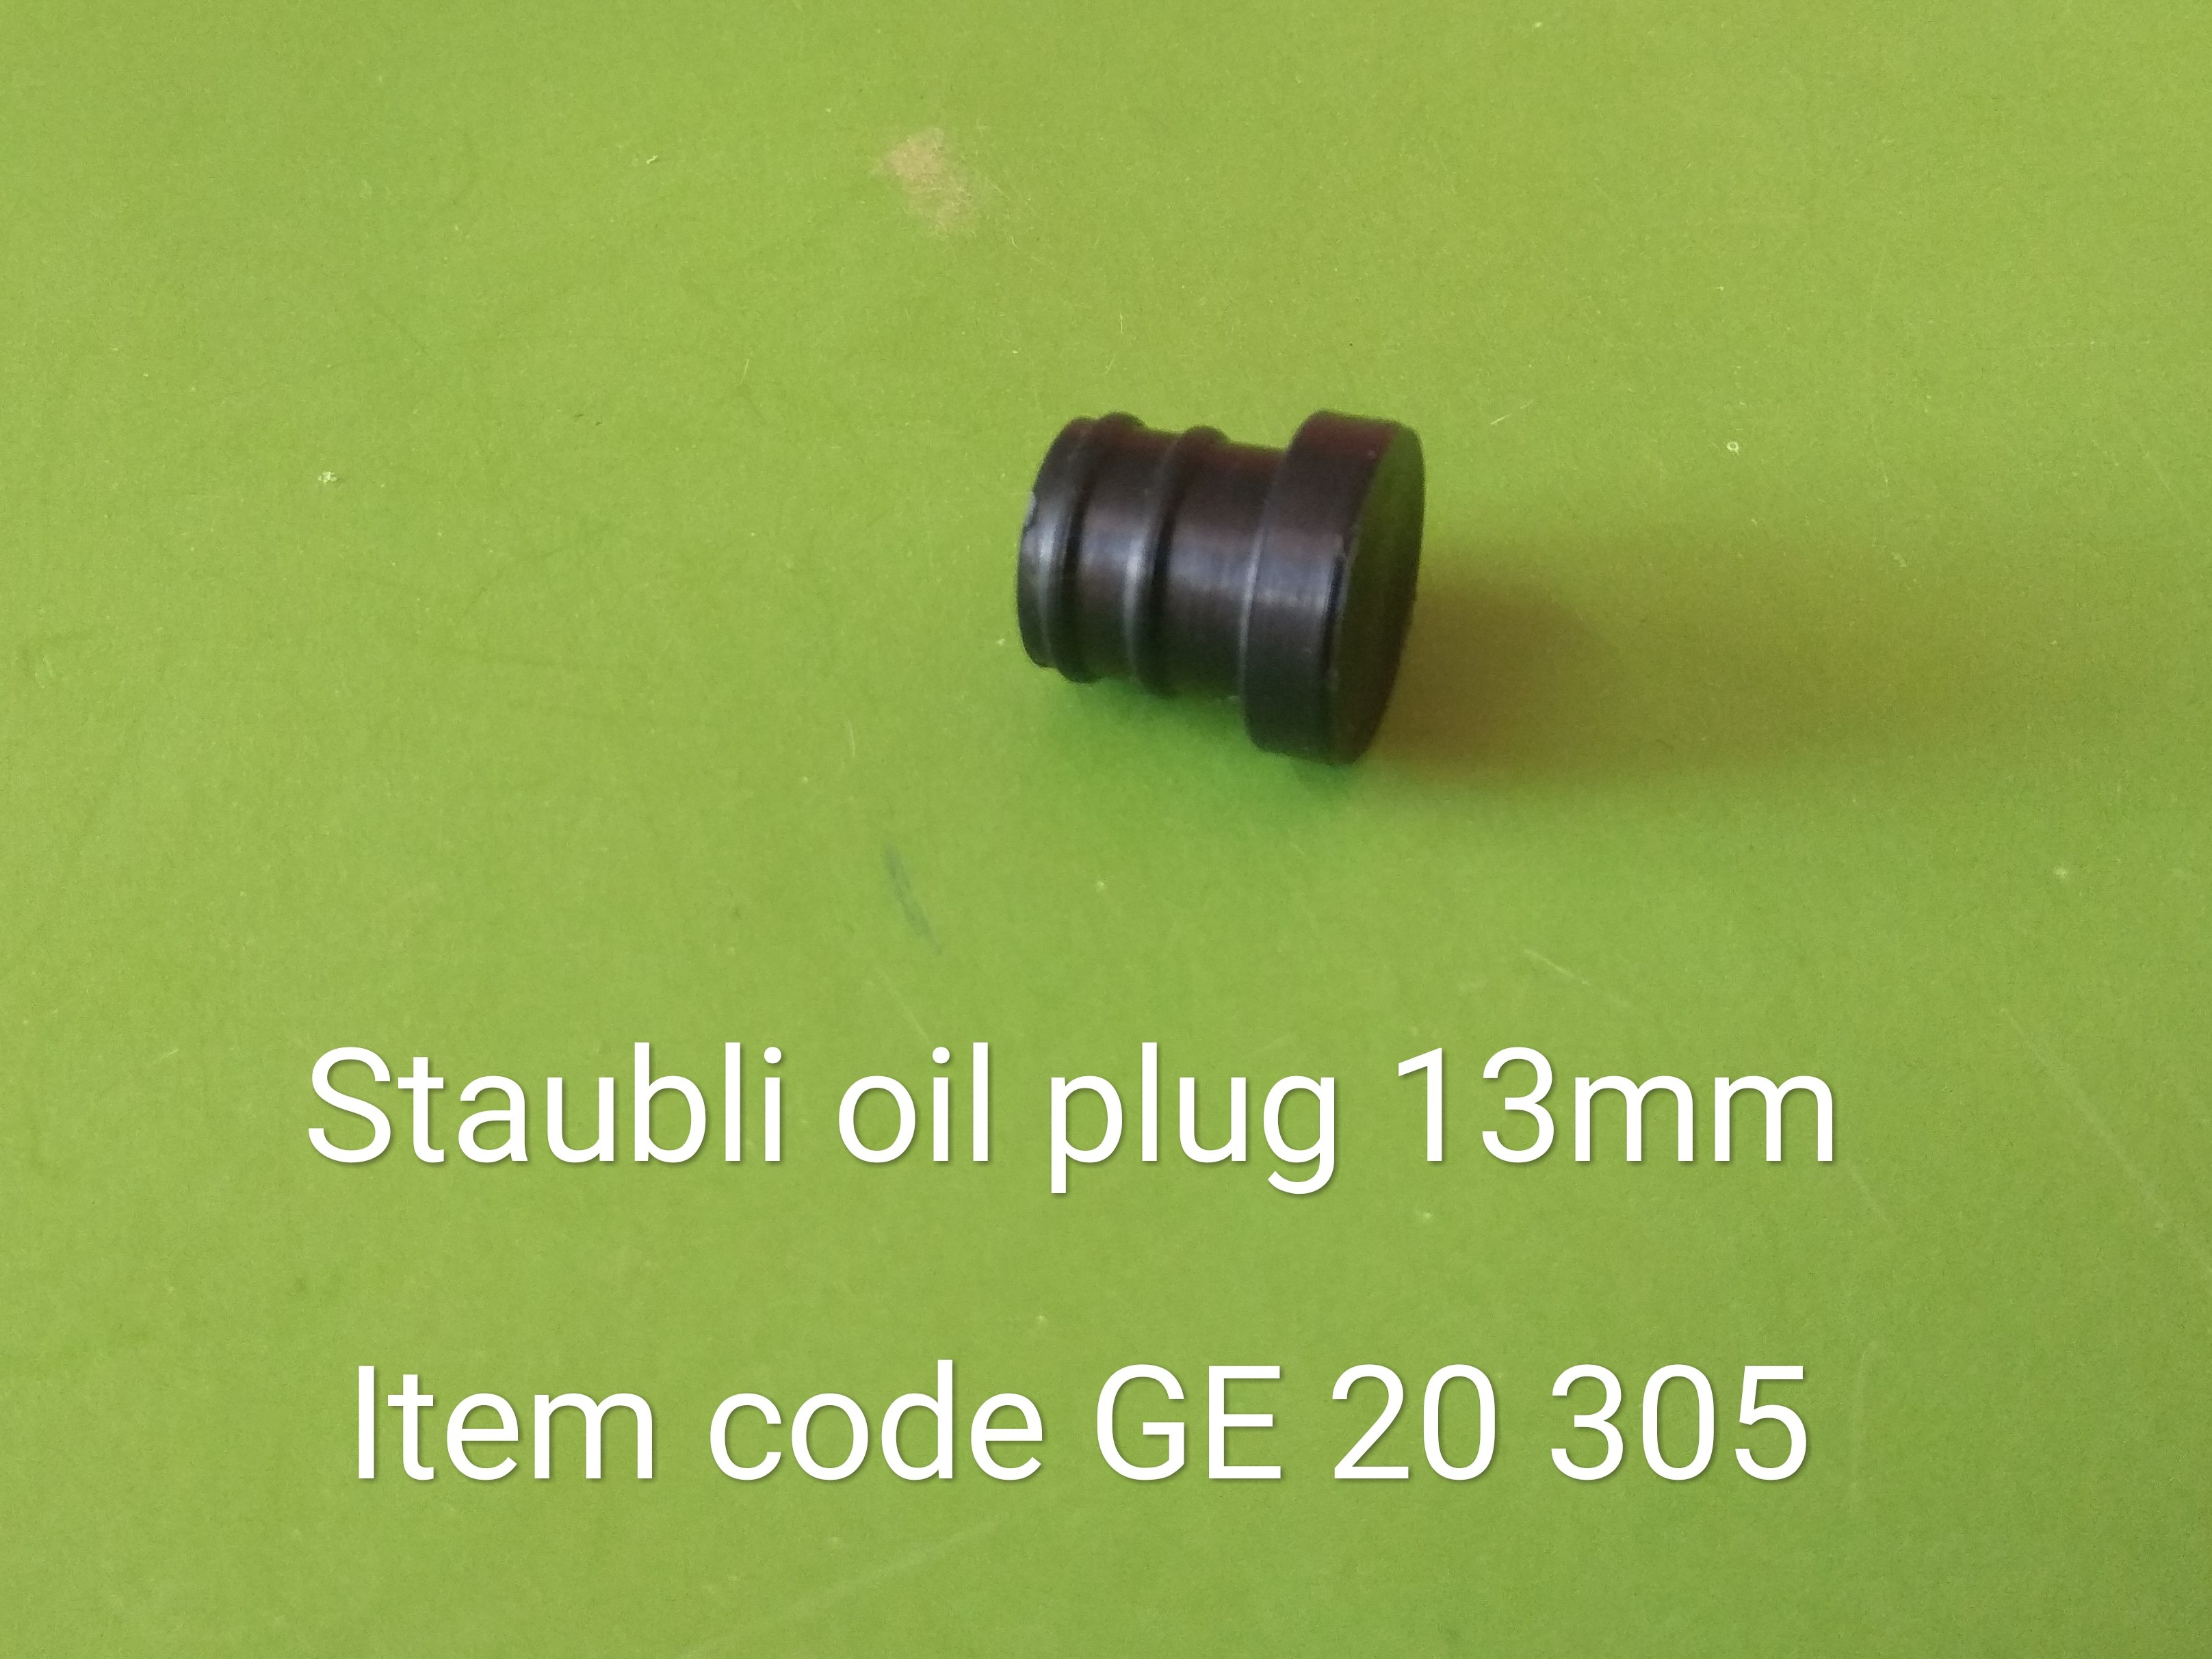 GE_20_305_staubli_oil_plug__75_18.jpg